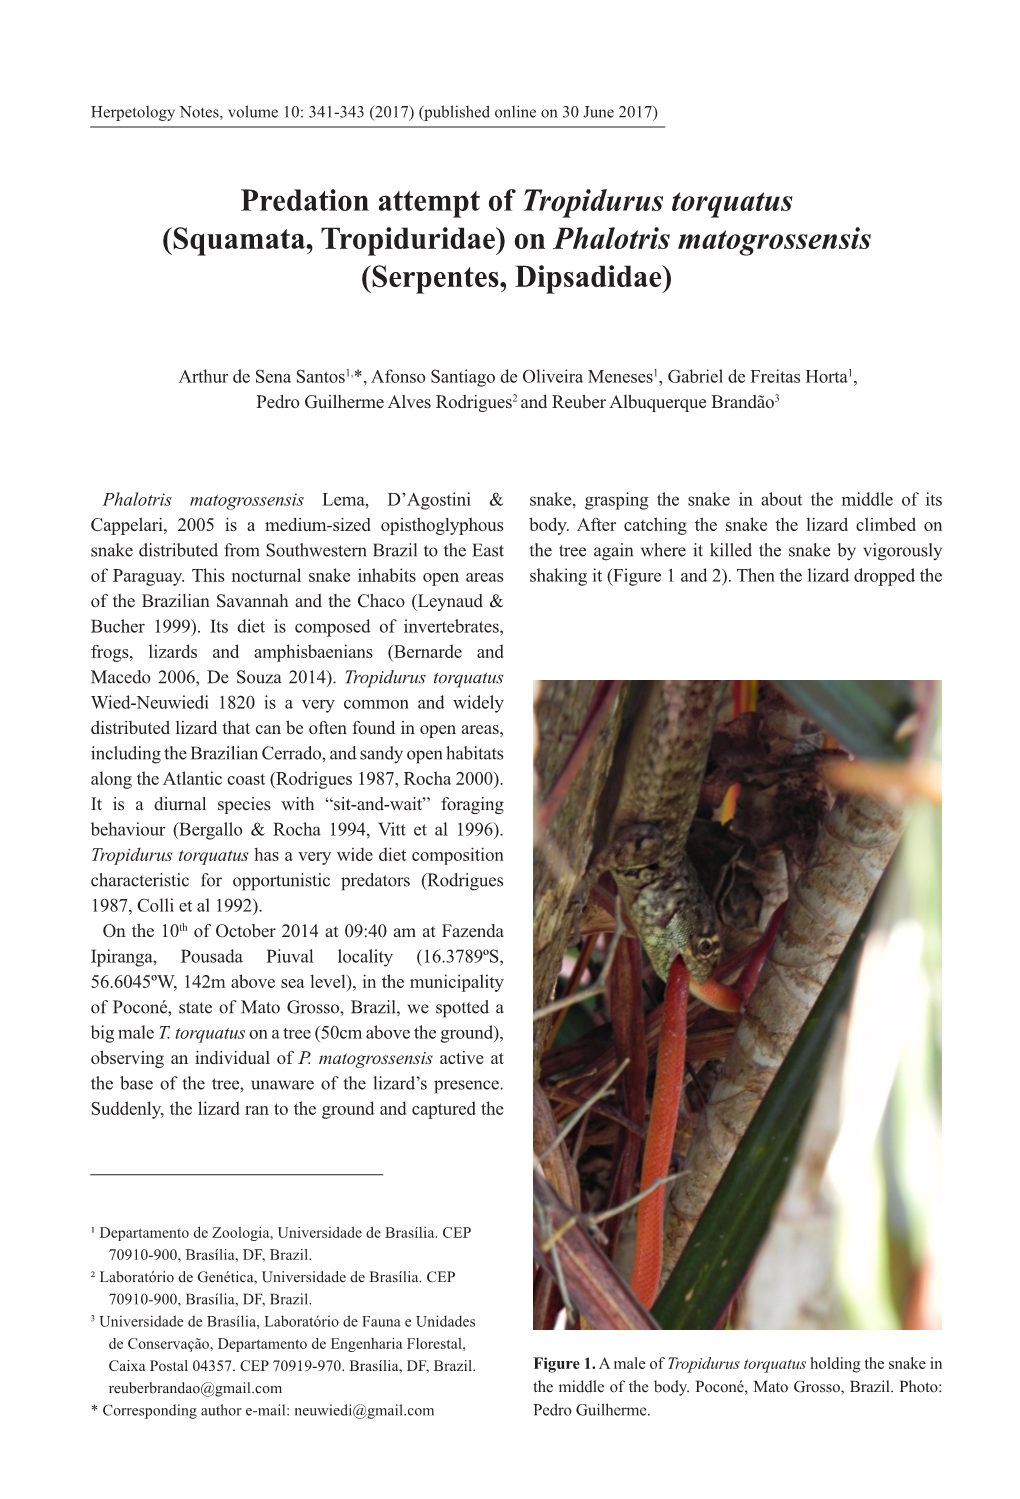 On Phalotris Matogrossensis (Serpentes, Dipsadidae)